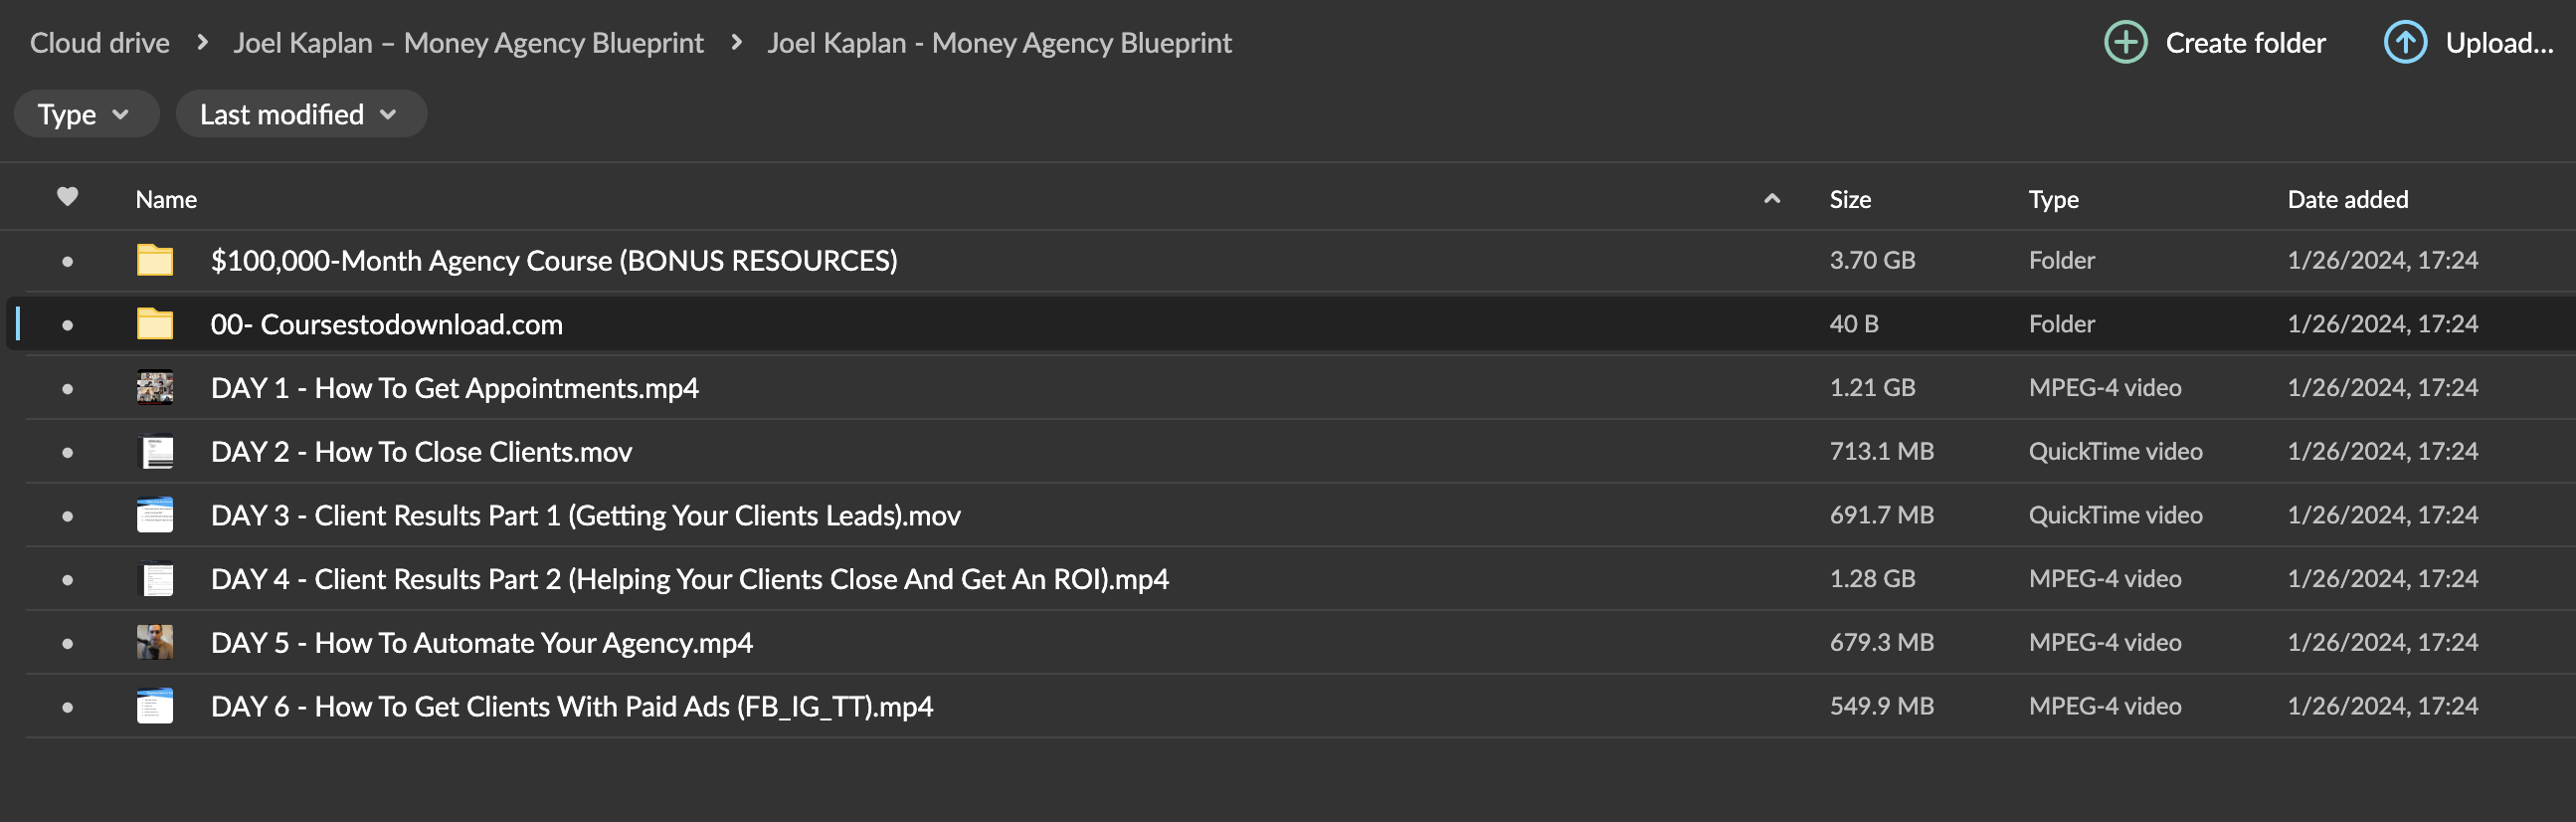 Joel Kaplan – Money Agency Blueprint Download